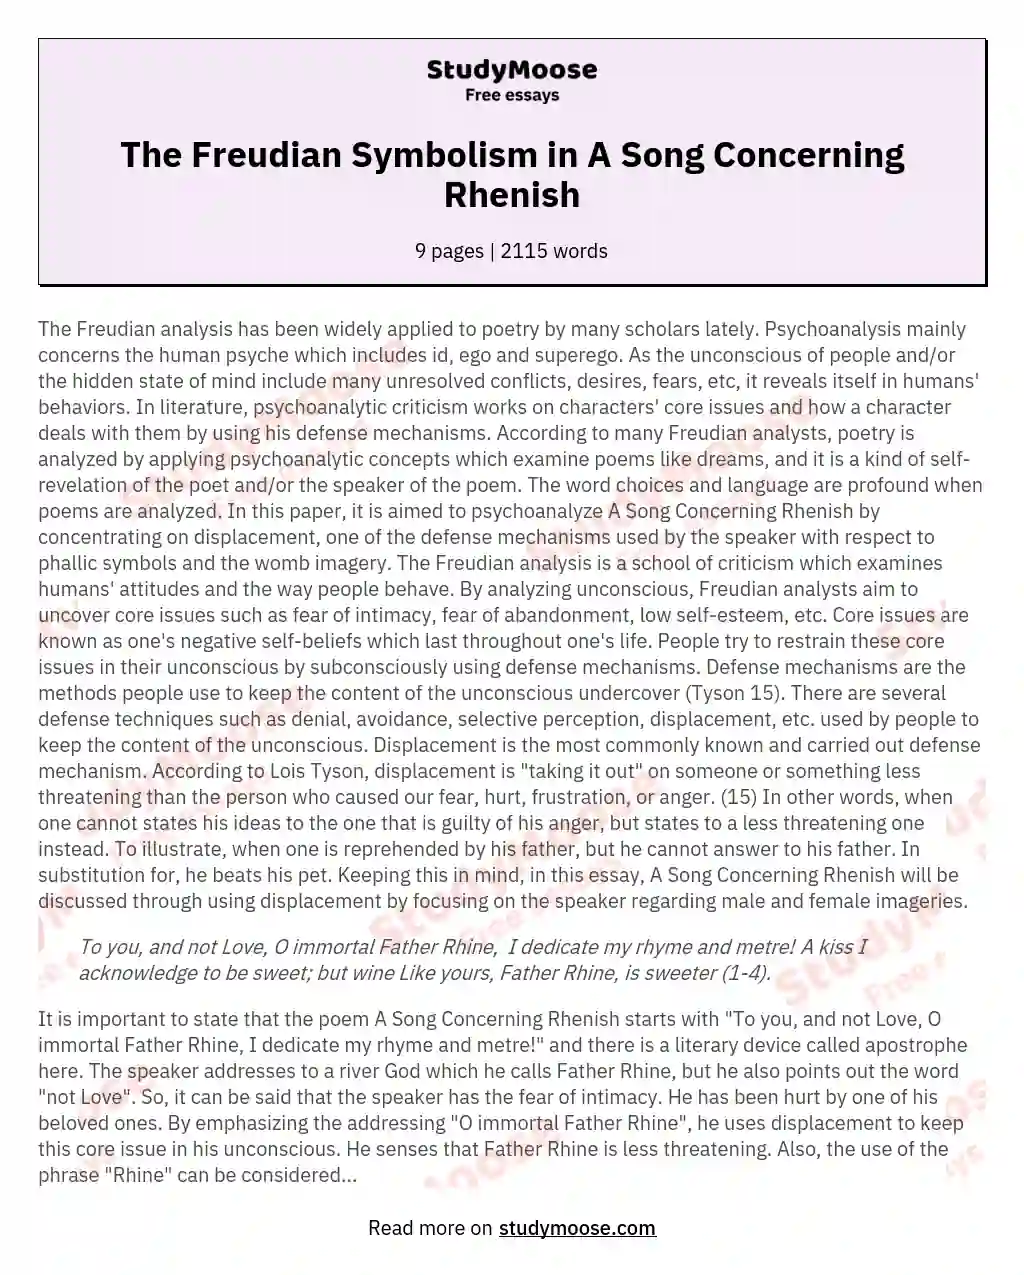 The Freudian Symbolism in A Song Concerning Rhenish essay